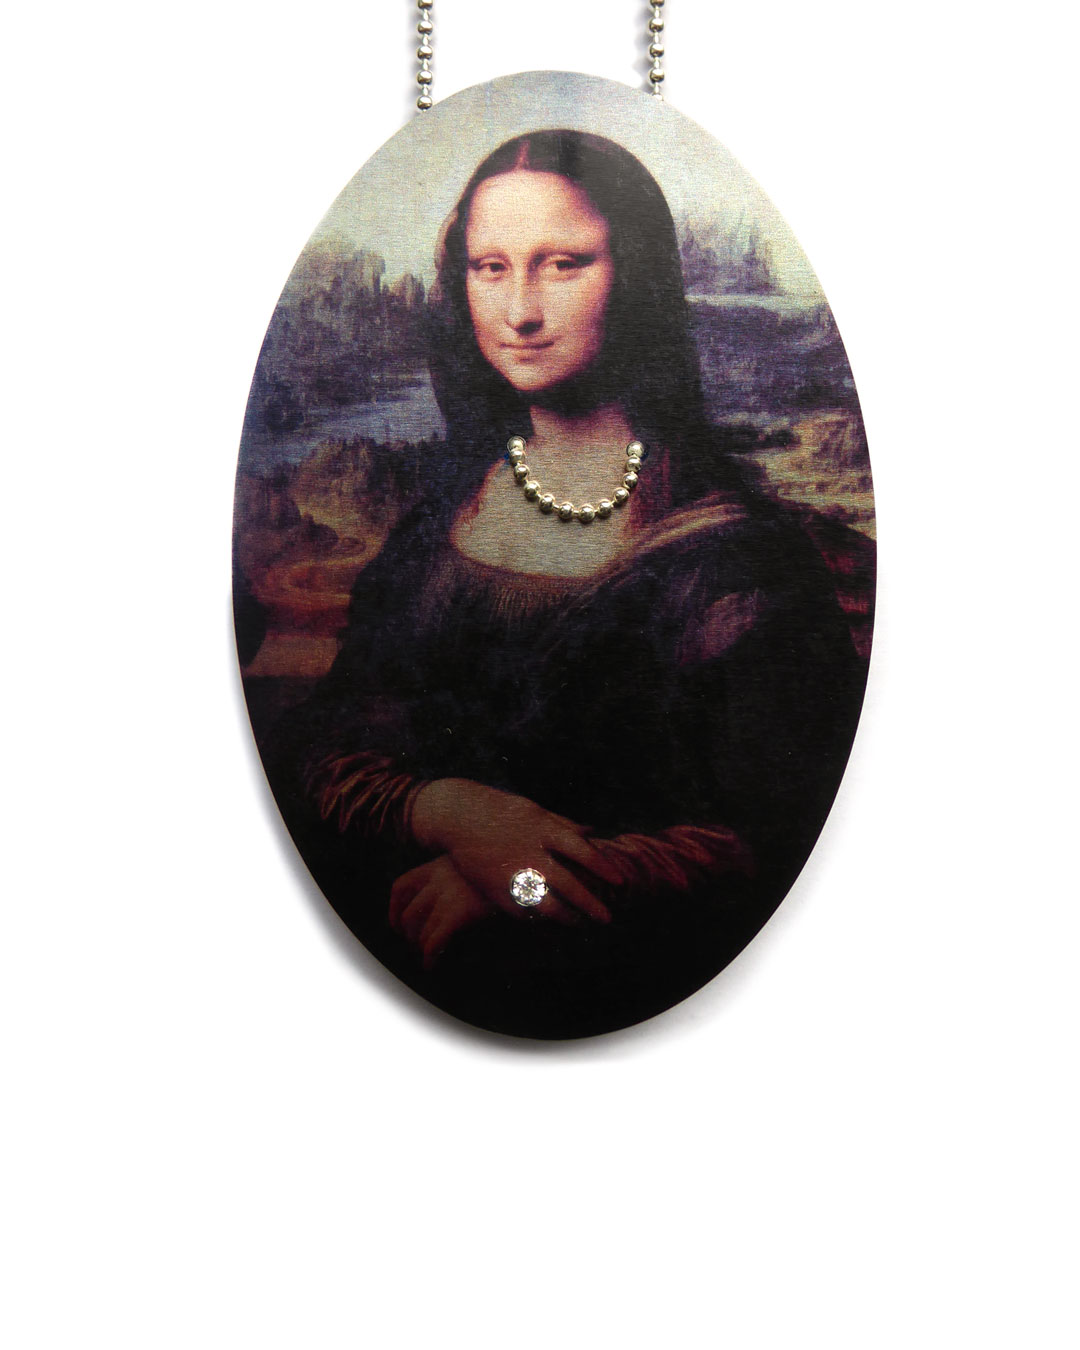 Herman Hermsen, Mona Lisa Chained, 2015, necklace; print on aluminium, wood, silver, zirconia, 320 x 60 x 10 mm